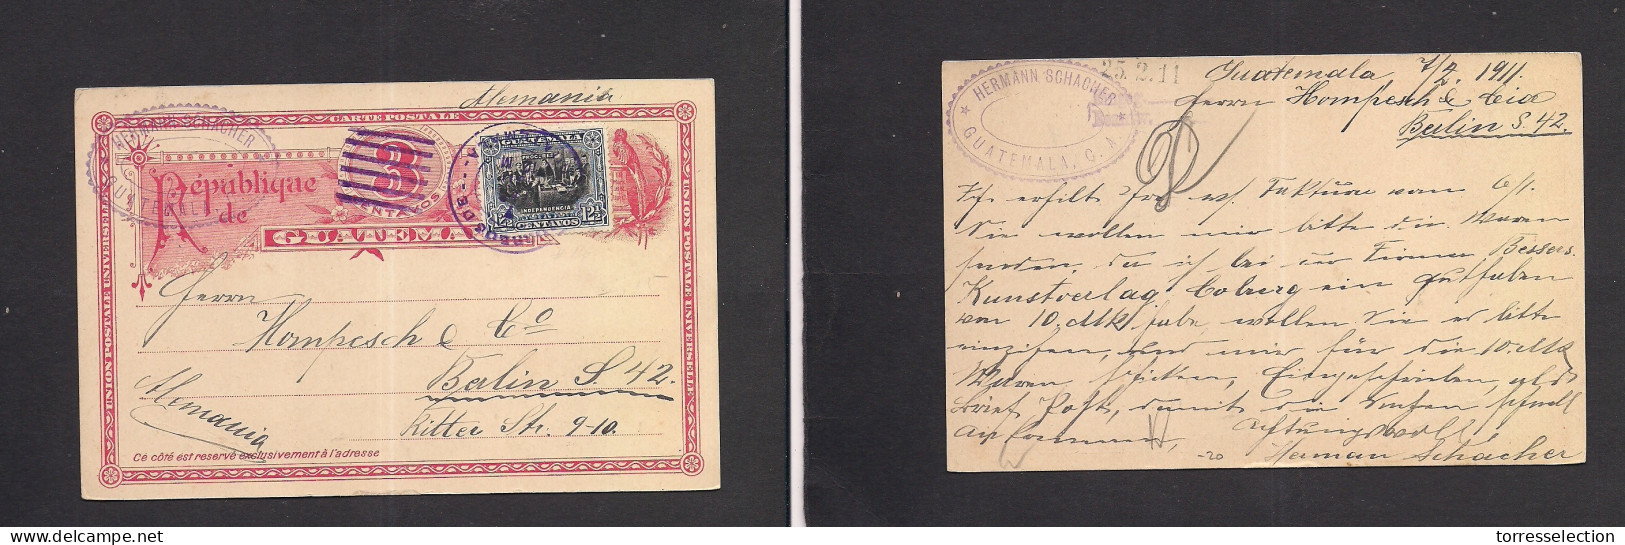 GUATEMALA. 1911 (7 Febr) GPO - Germany, Berlin. 3c Red Stat Card + Adtl, Tied Lilac Cds Grill. Fine. XSALE. - Guatemala